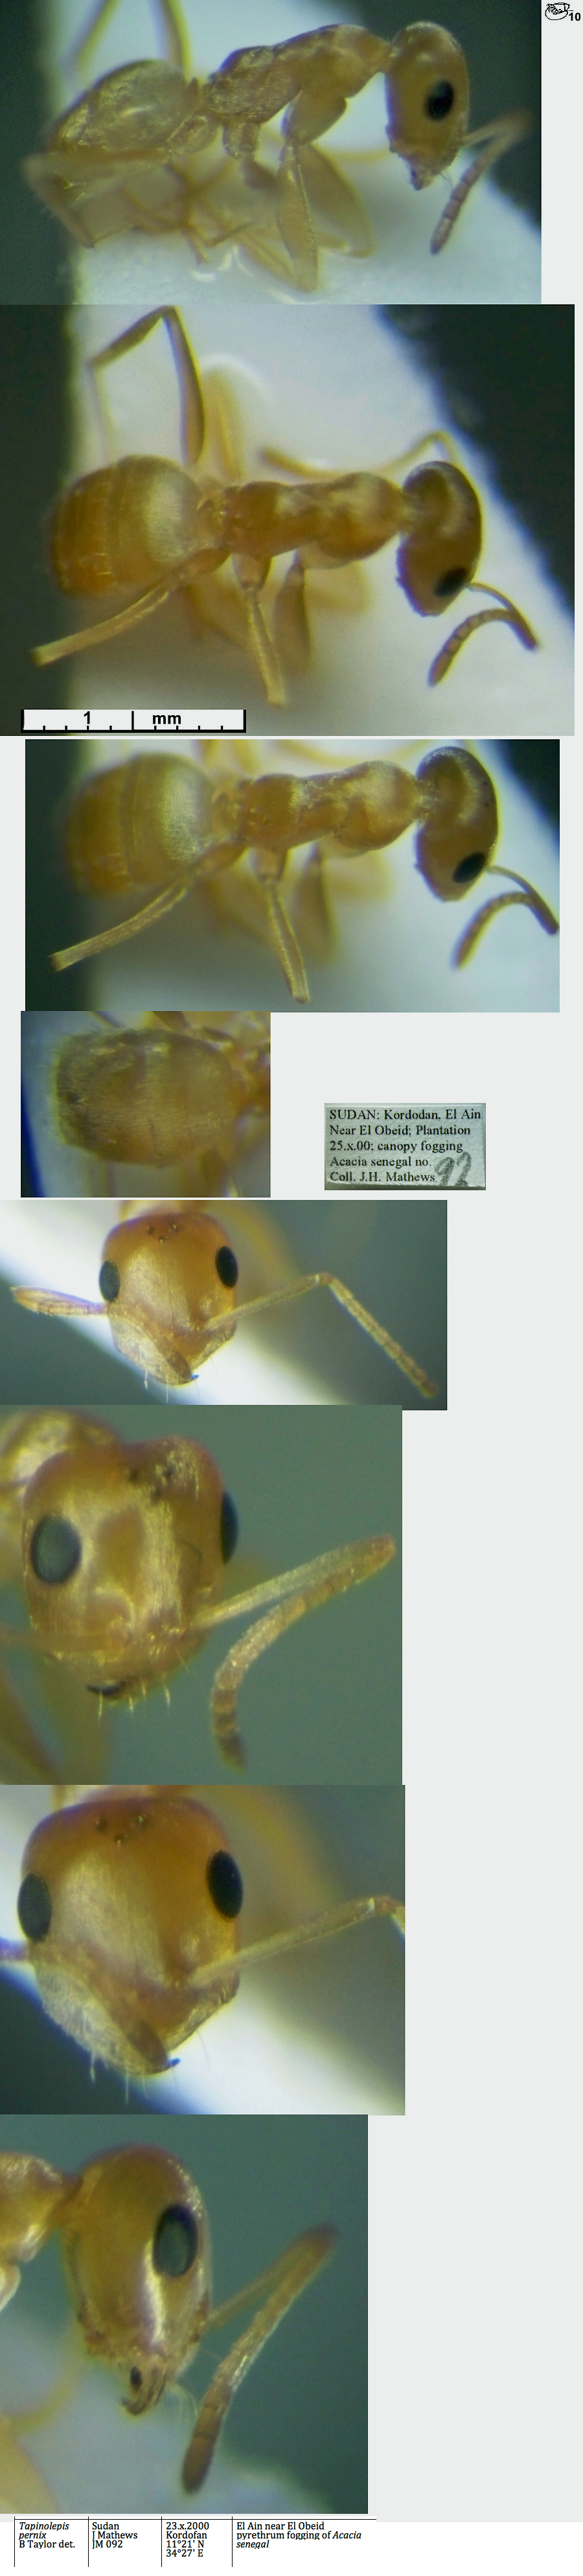 Tapinolepis pernix